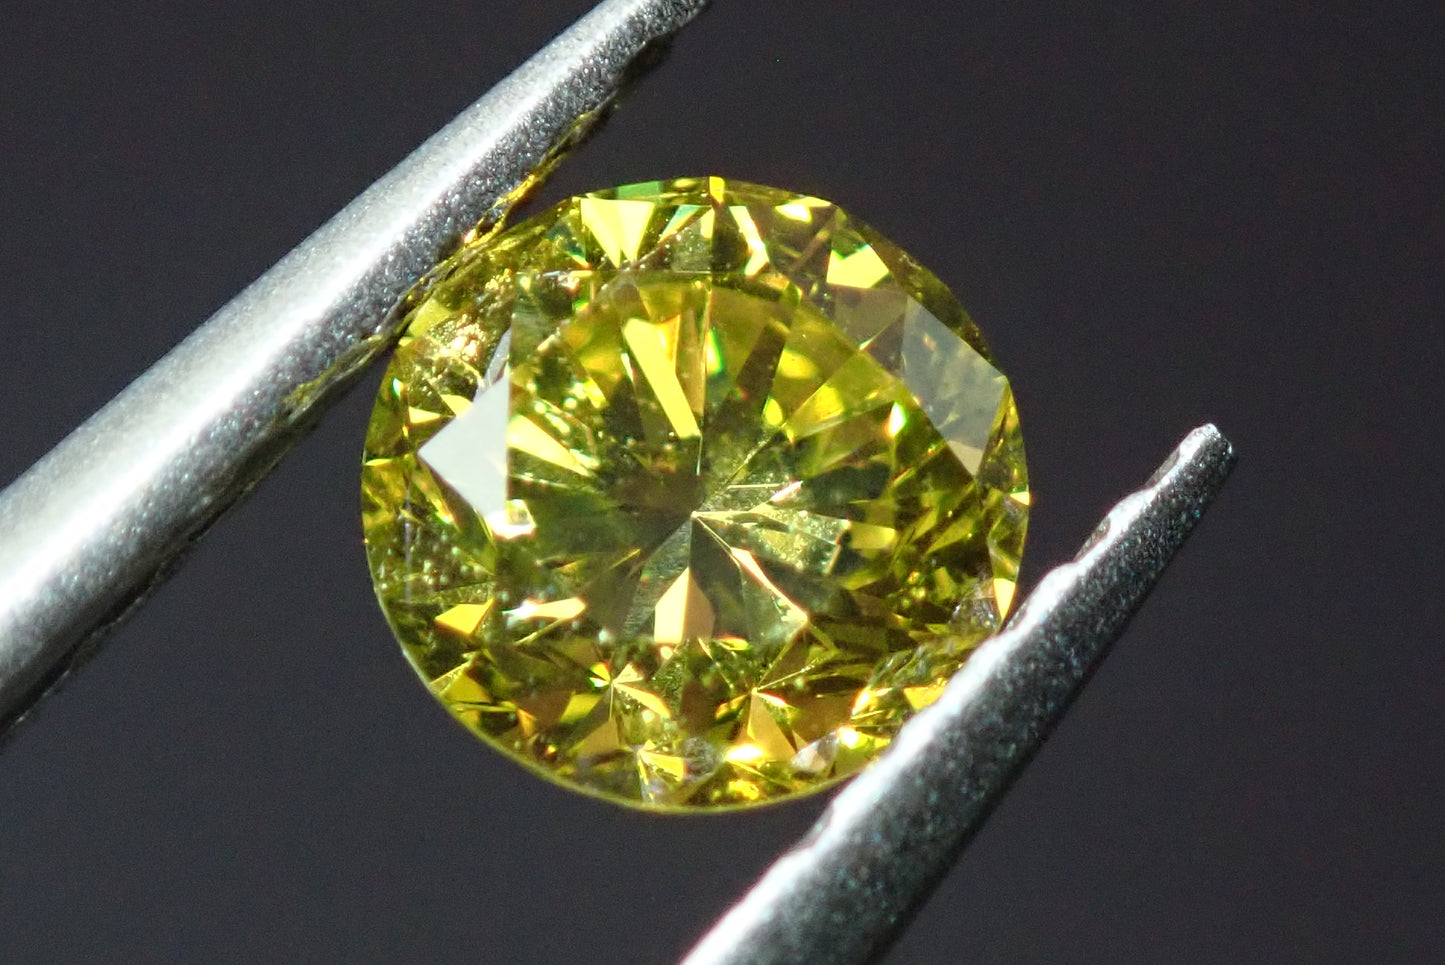 Natural fancy intense yellow diamond 0.520ct